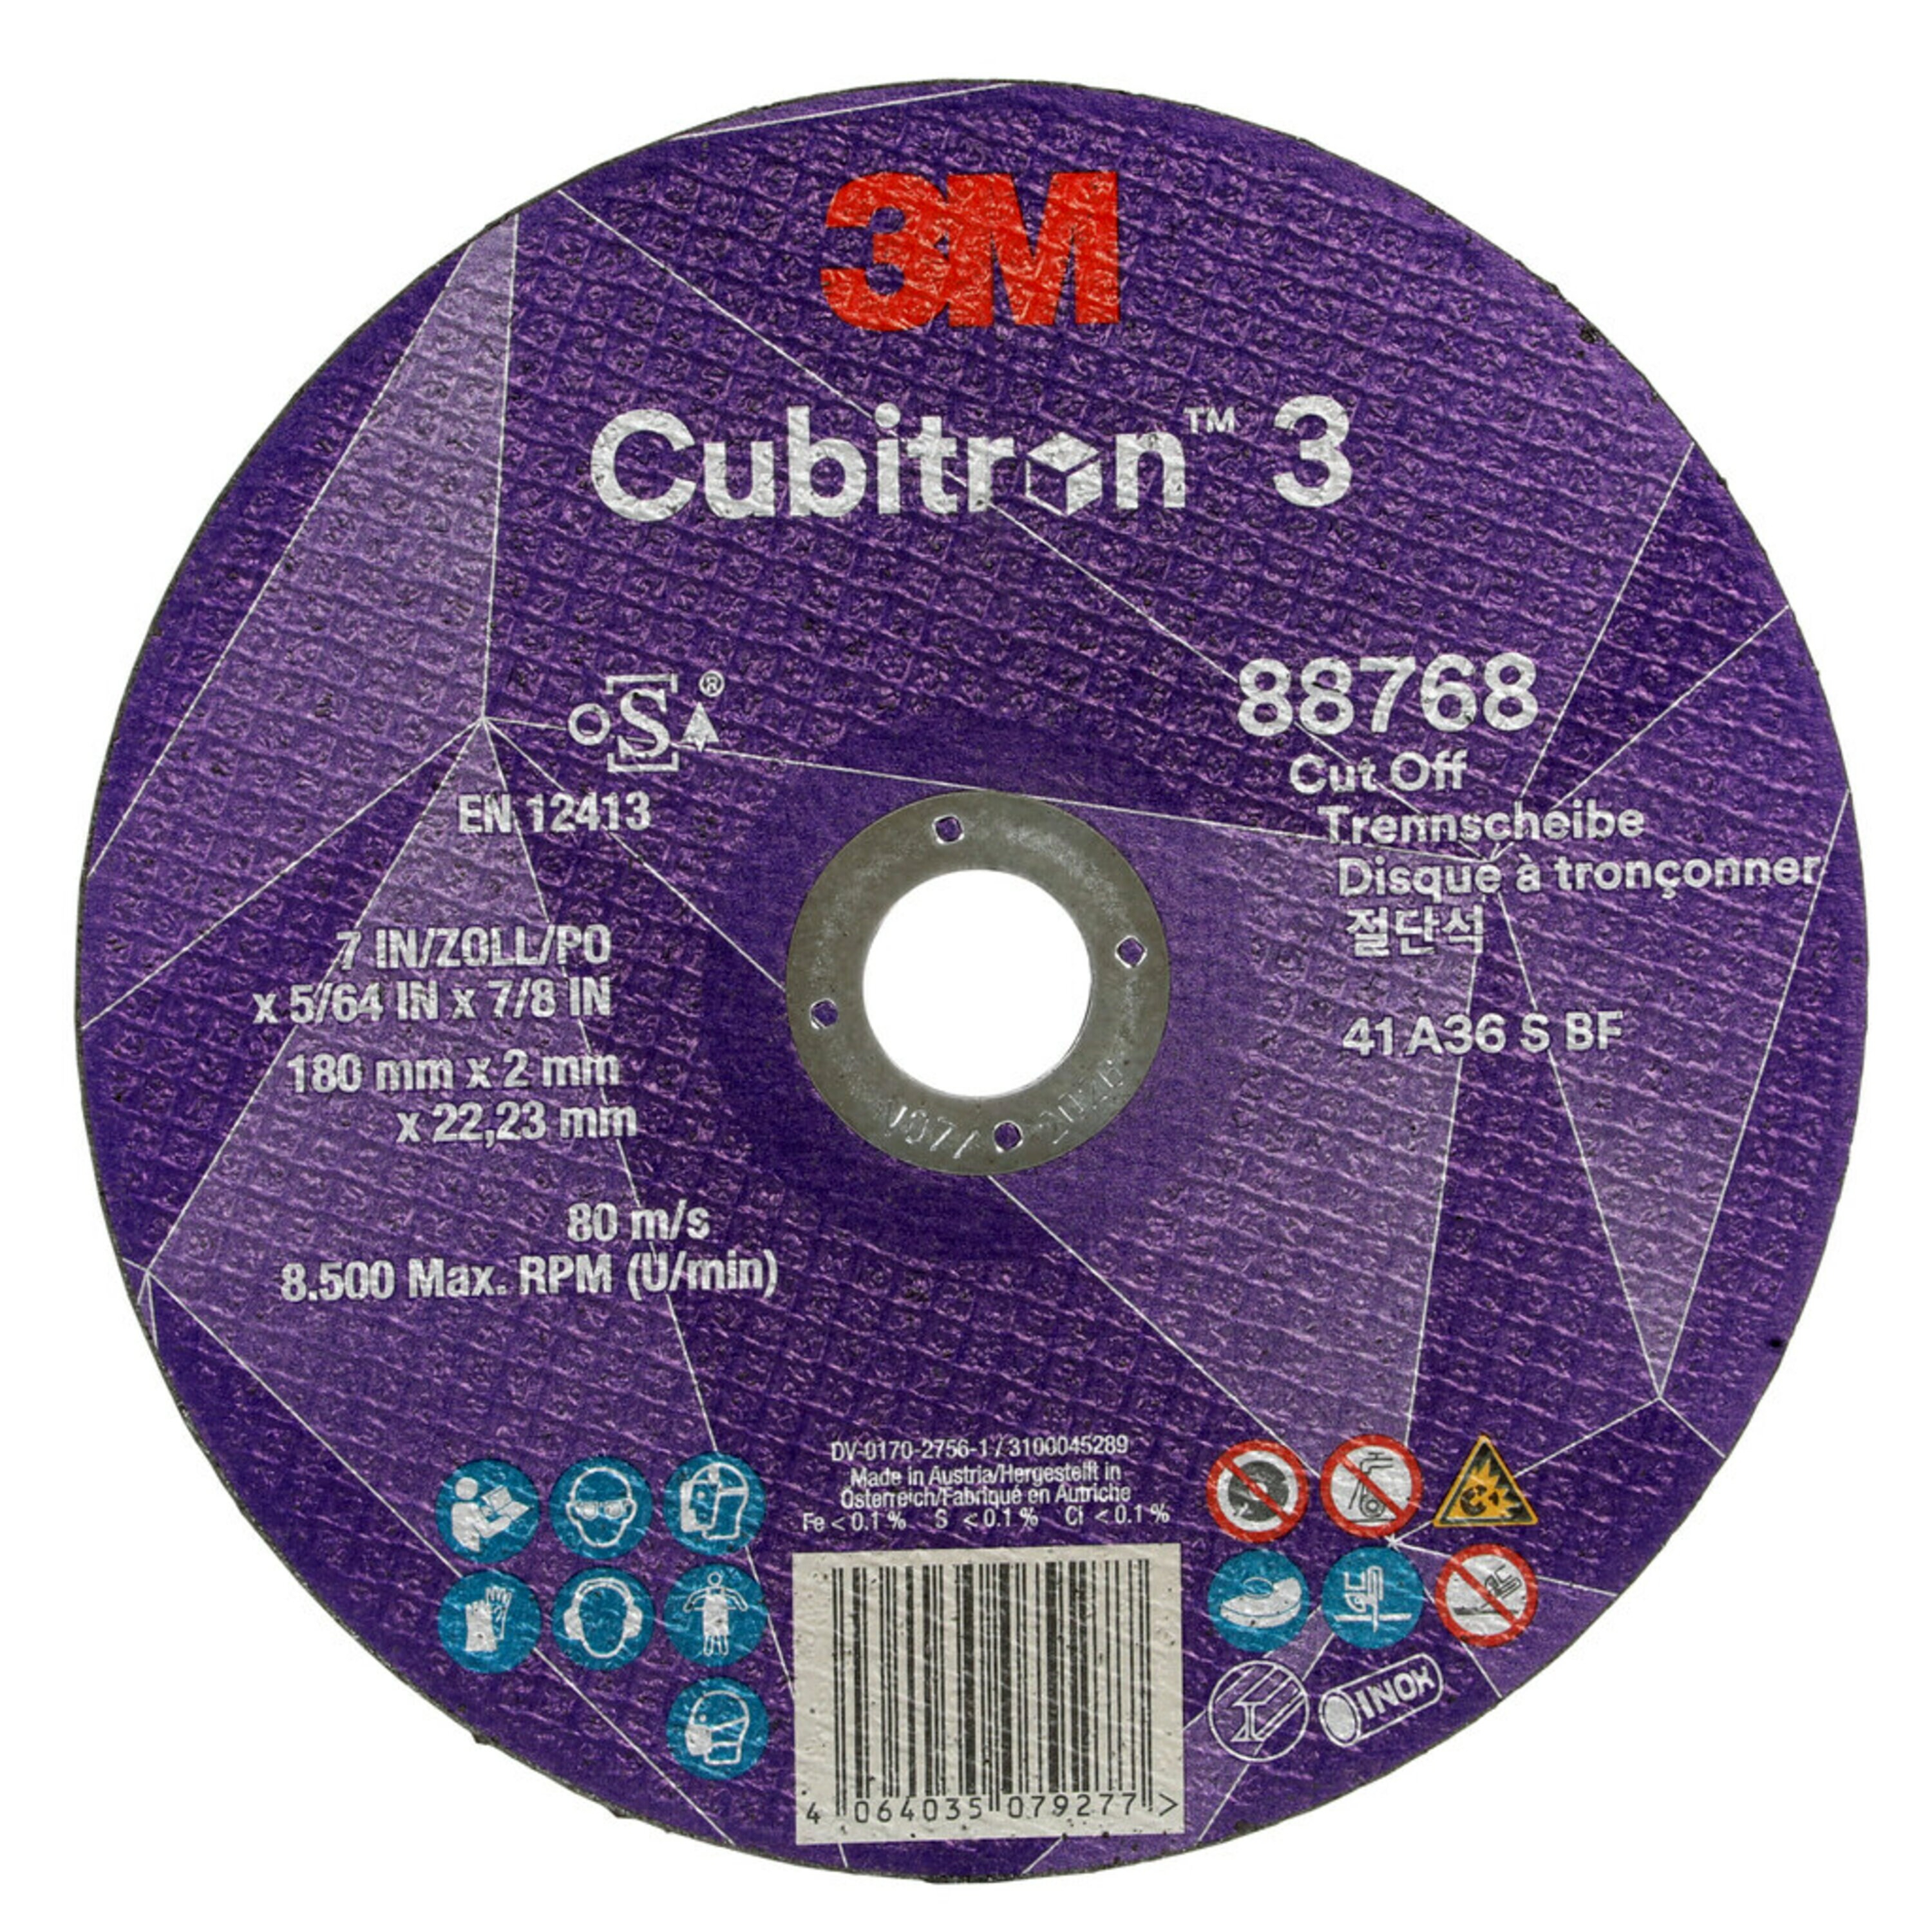 3M Cubitron 3 Trennscheibe, 180 mm, 2 mm, 22,23 mm, 36+, Typ 41 #88768